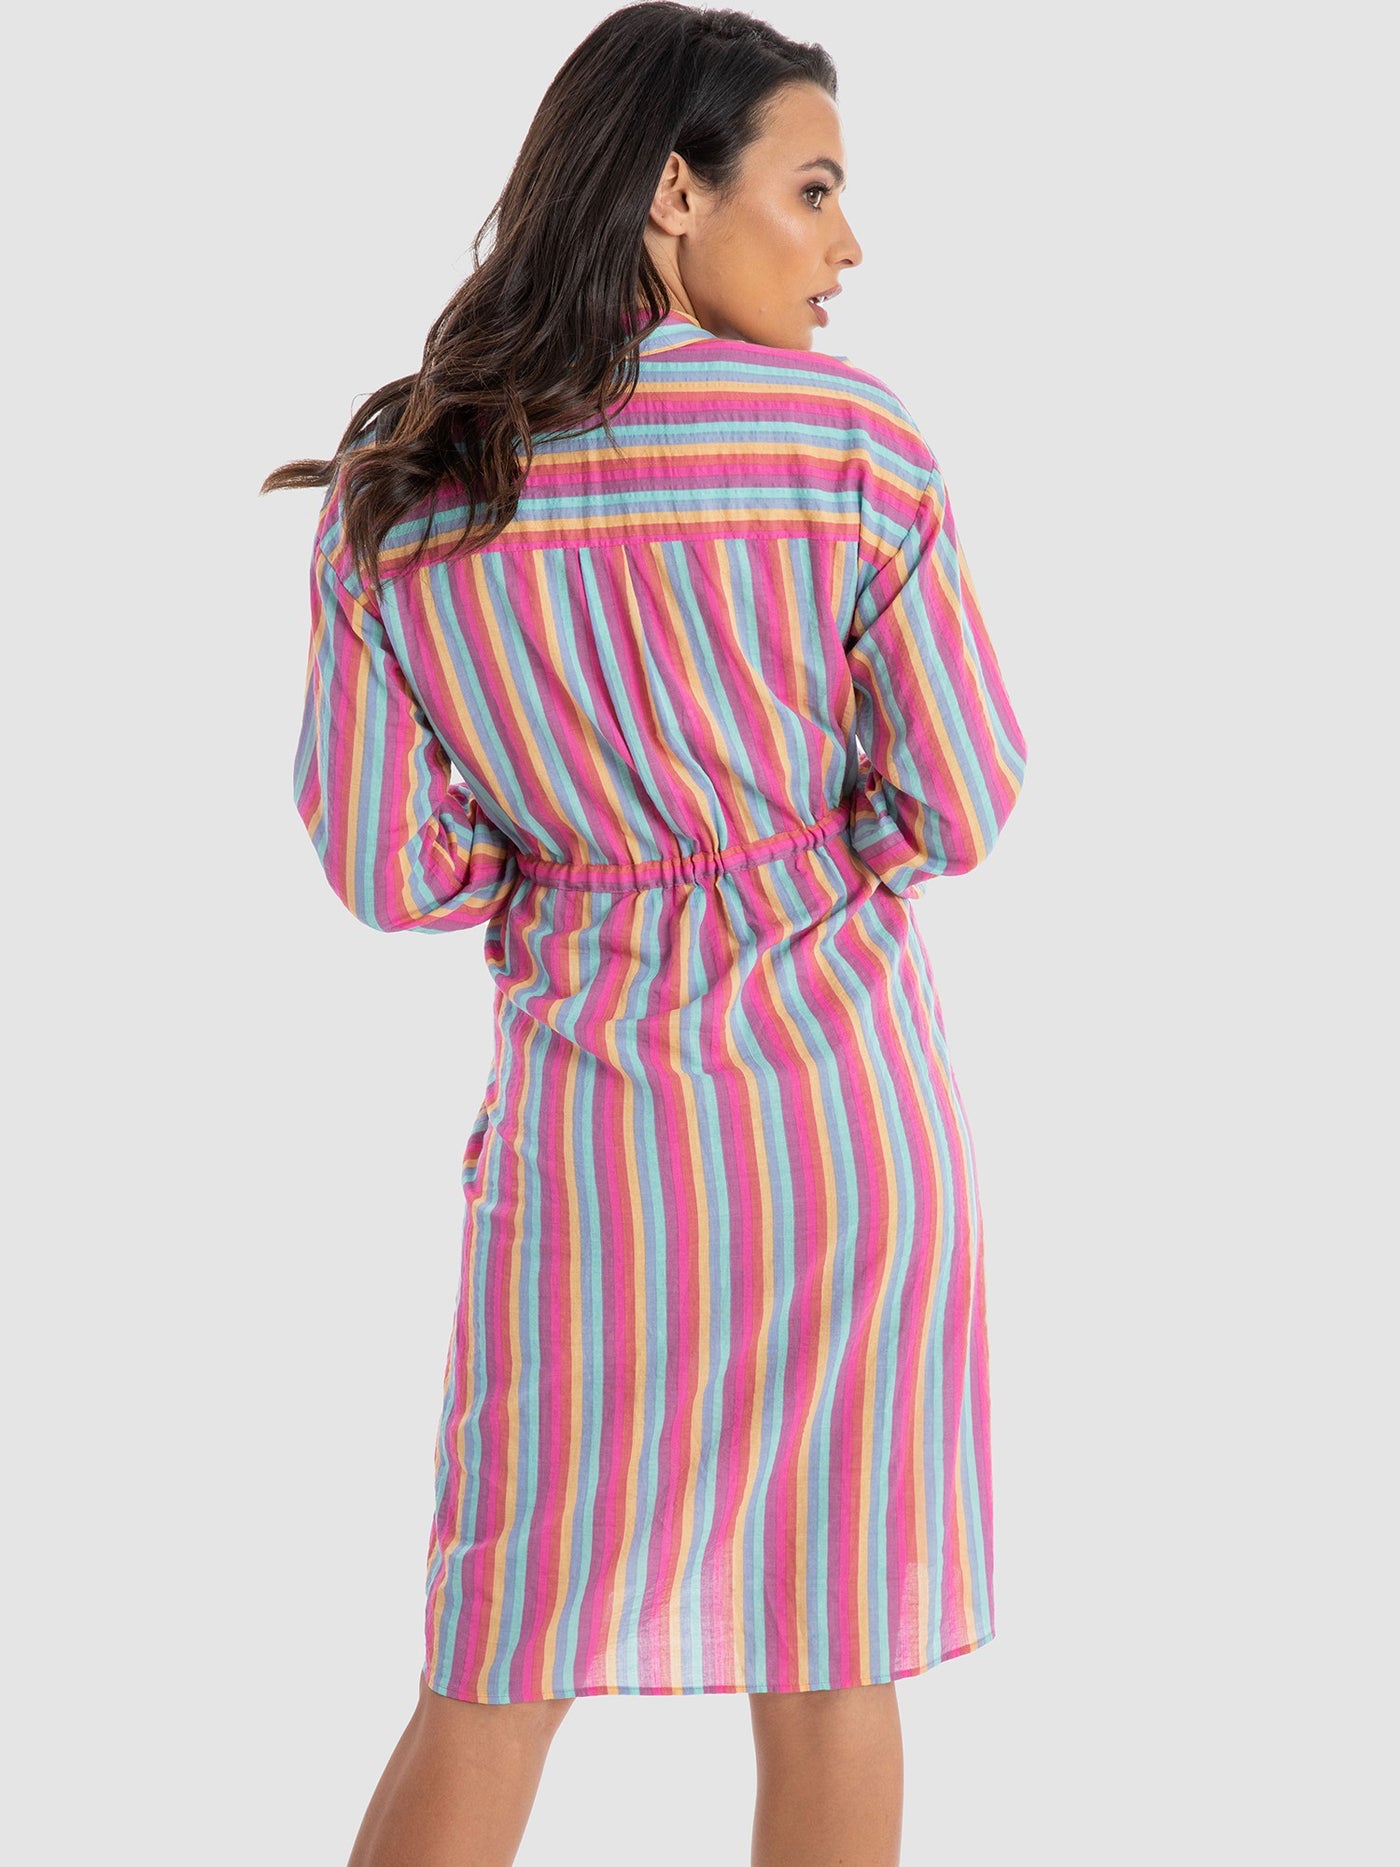 Premoda Womens Vertical Striped Shirt Dress